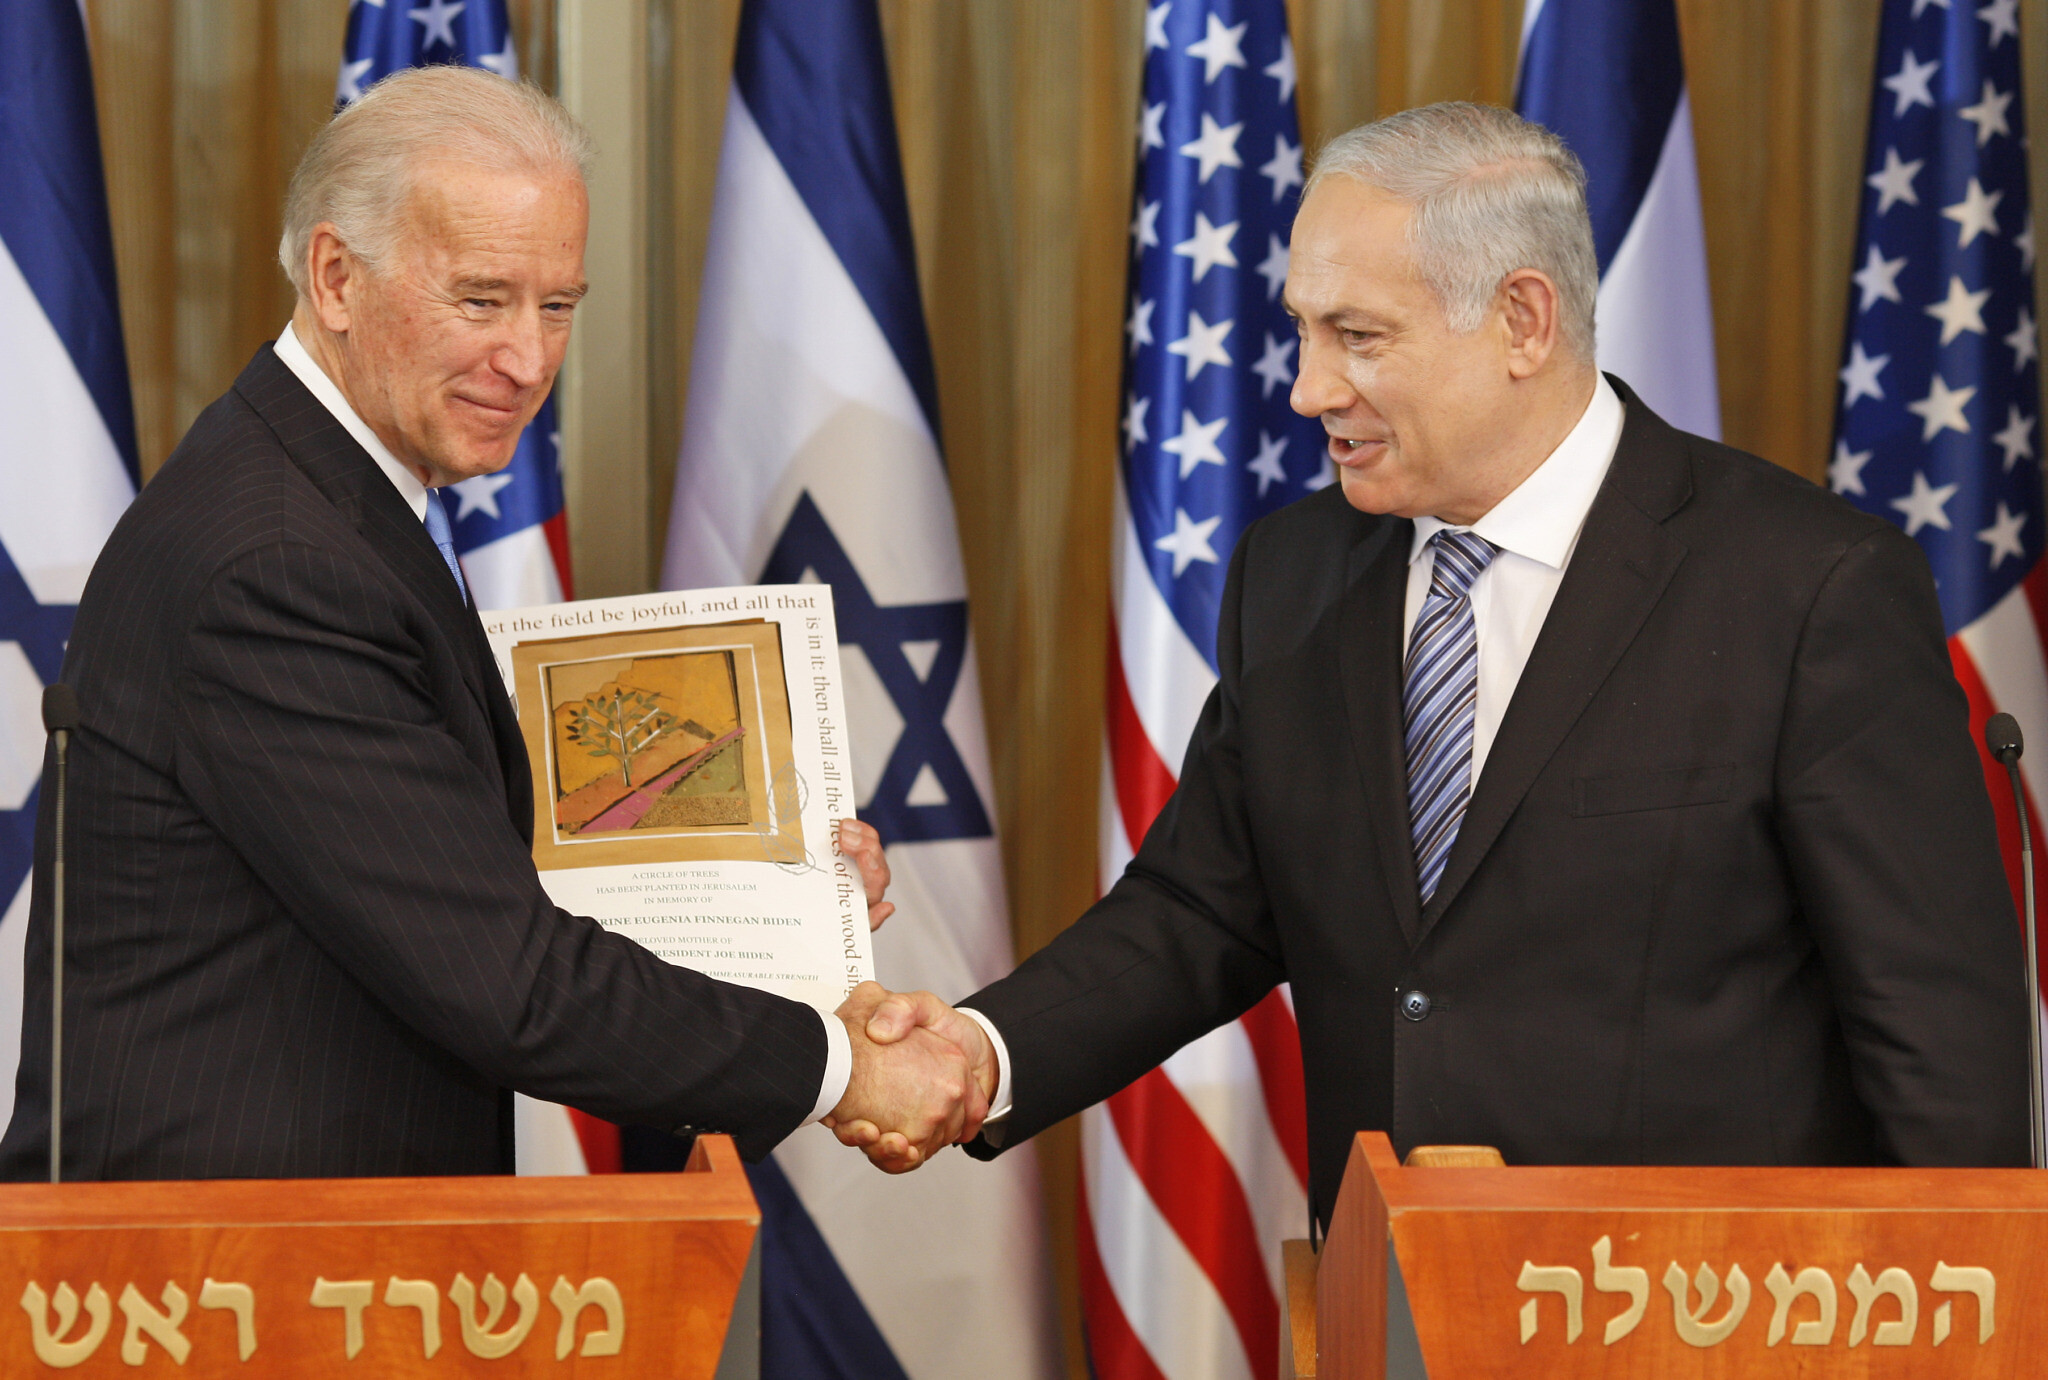 White House clarifies: No immediate plans for Netanyahu invite to DC